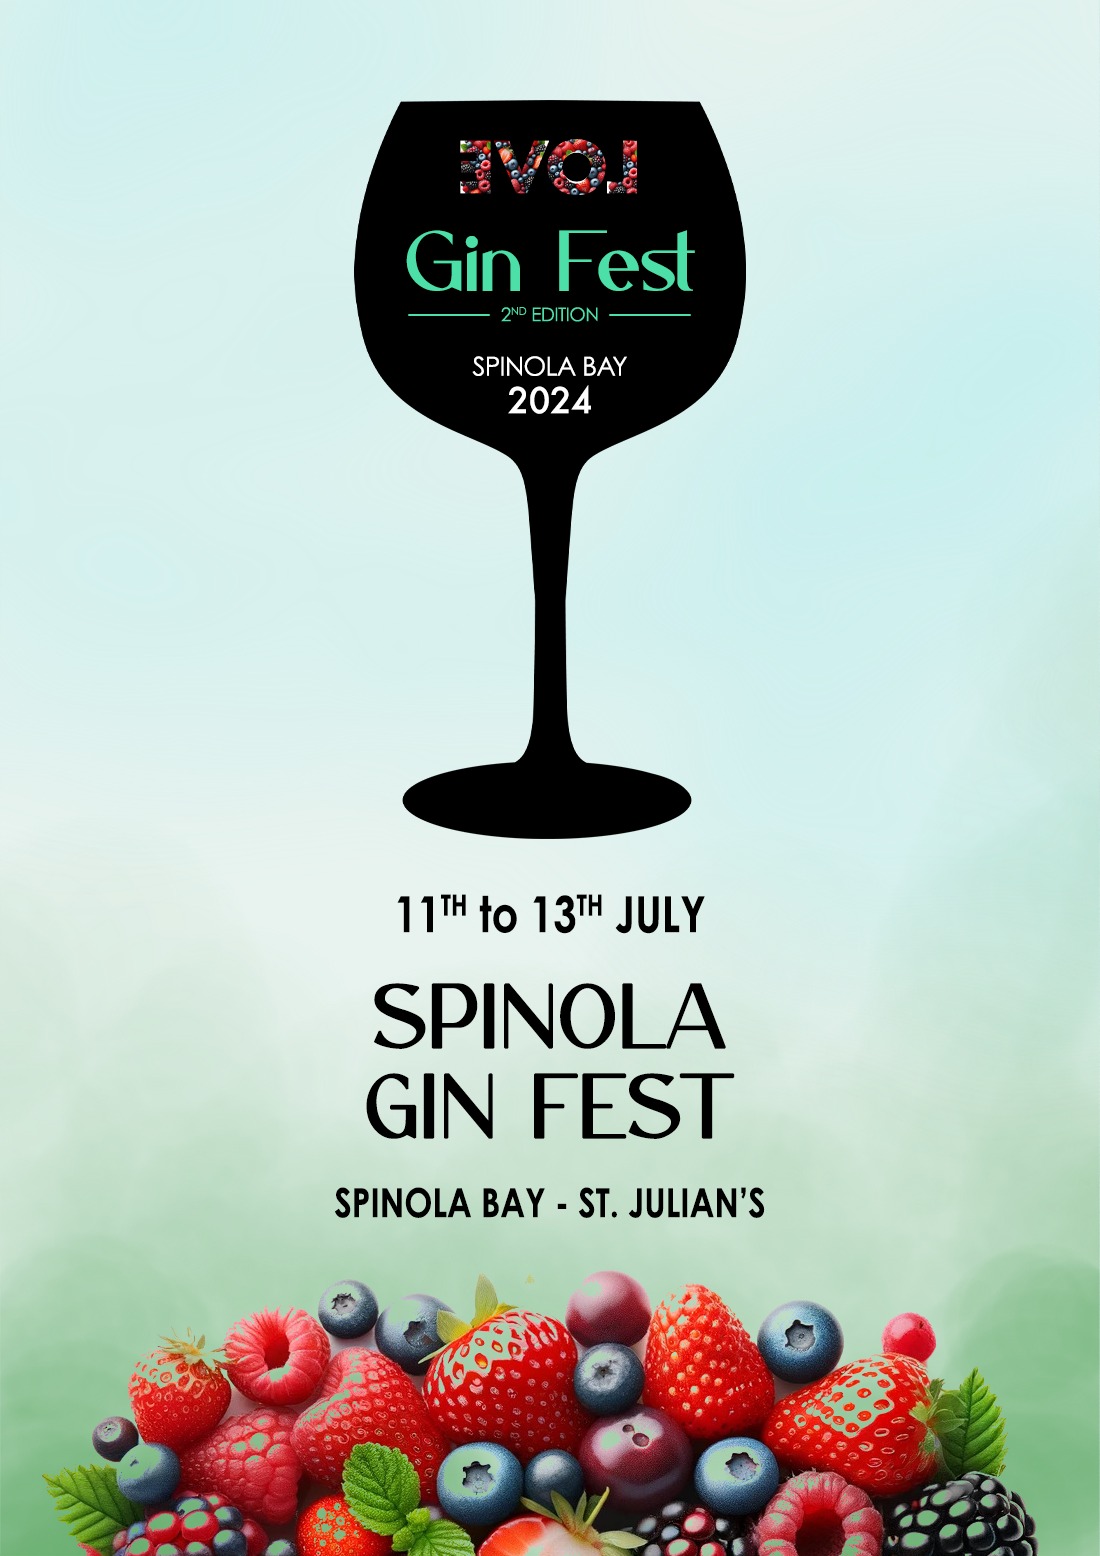 Spinola Gin Fest 2024 poster